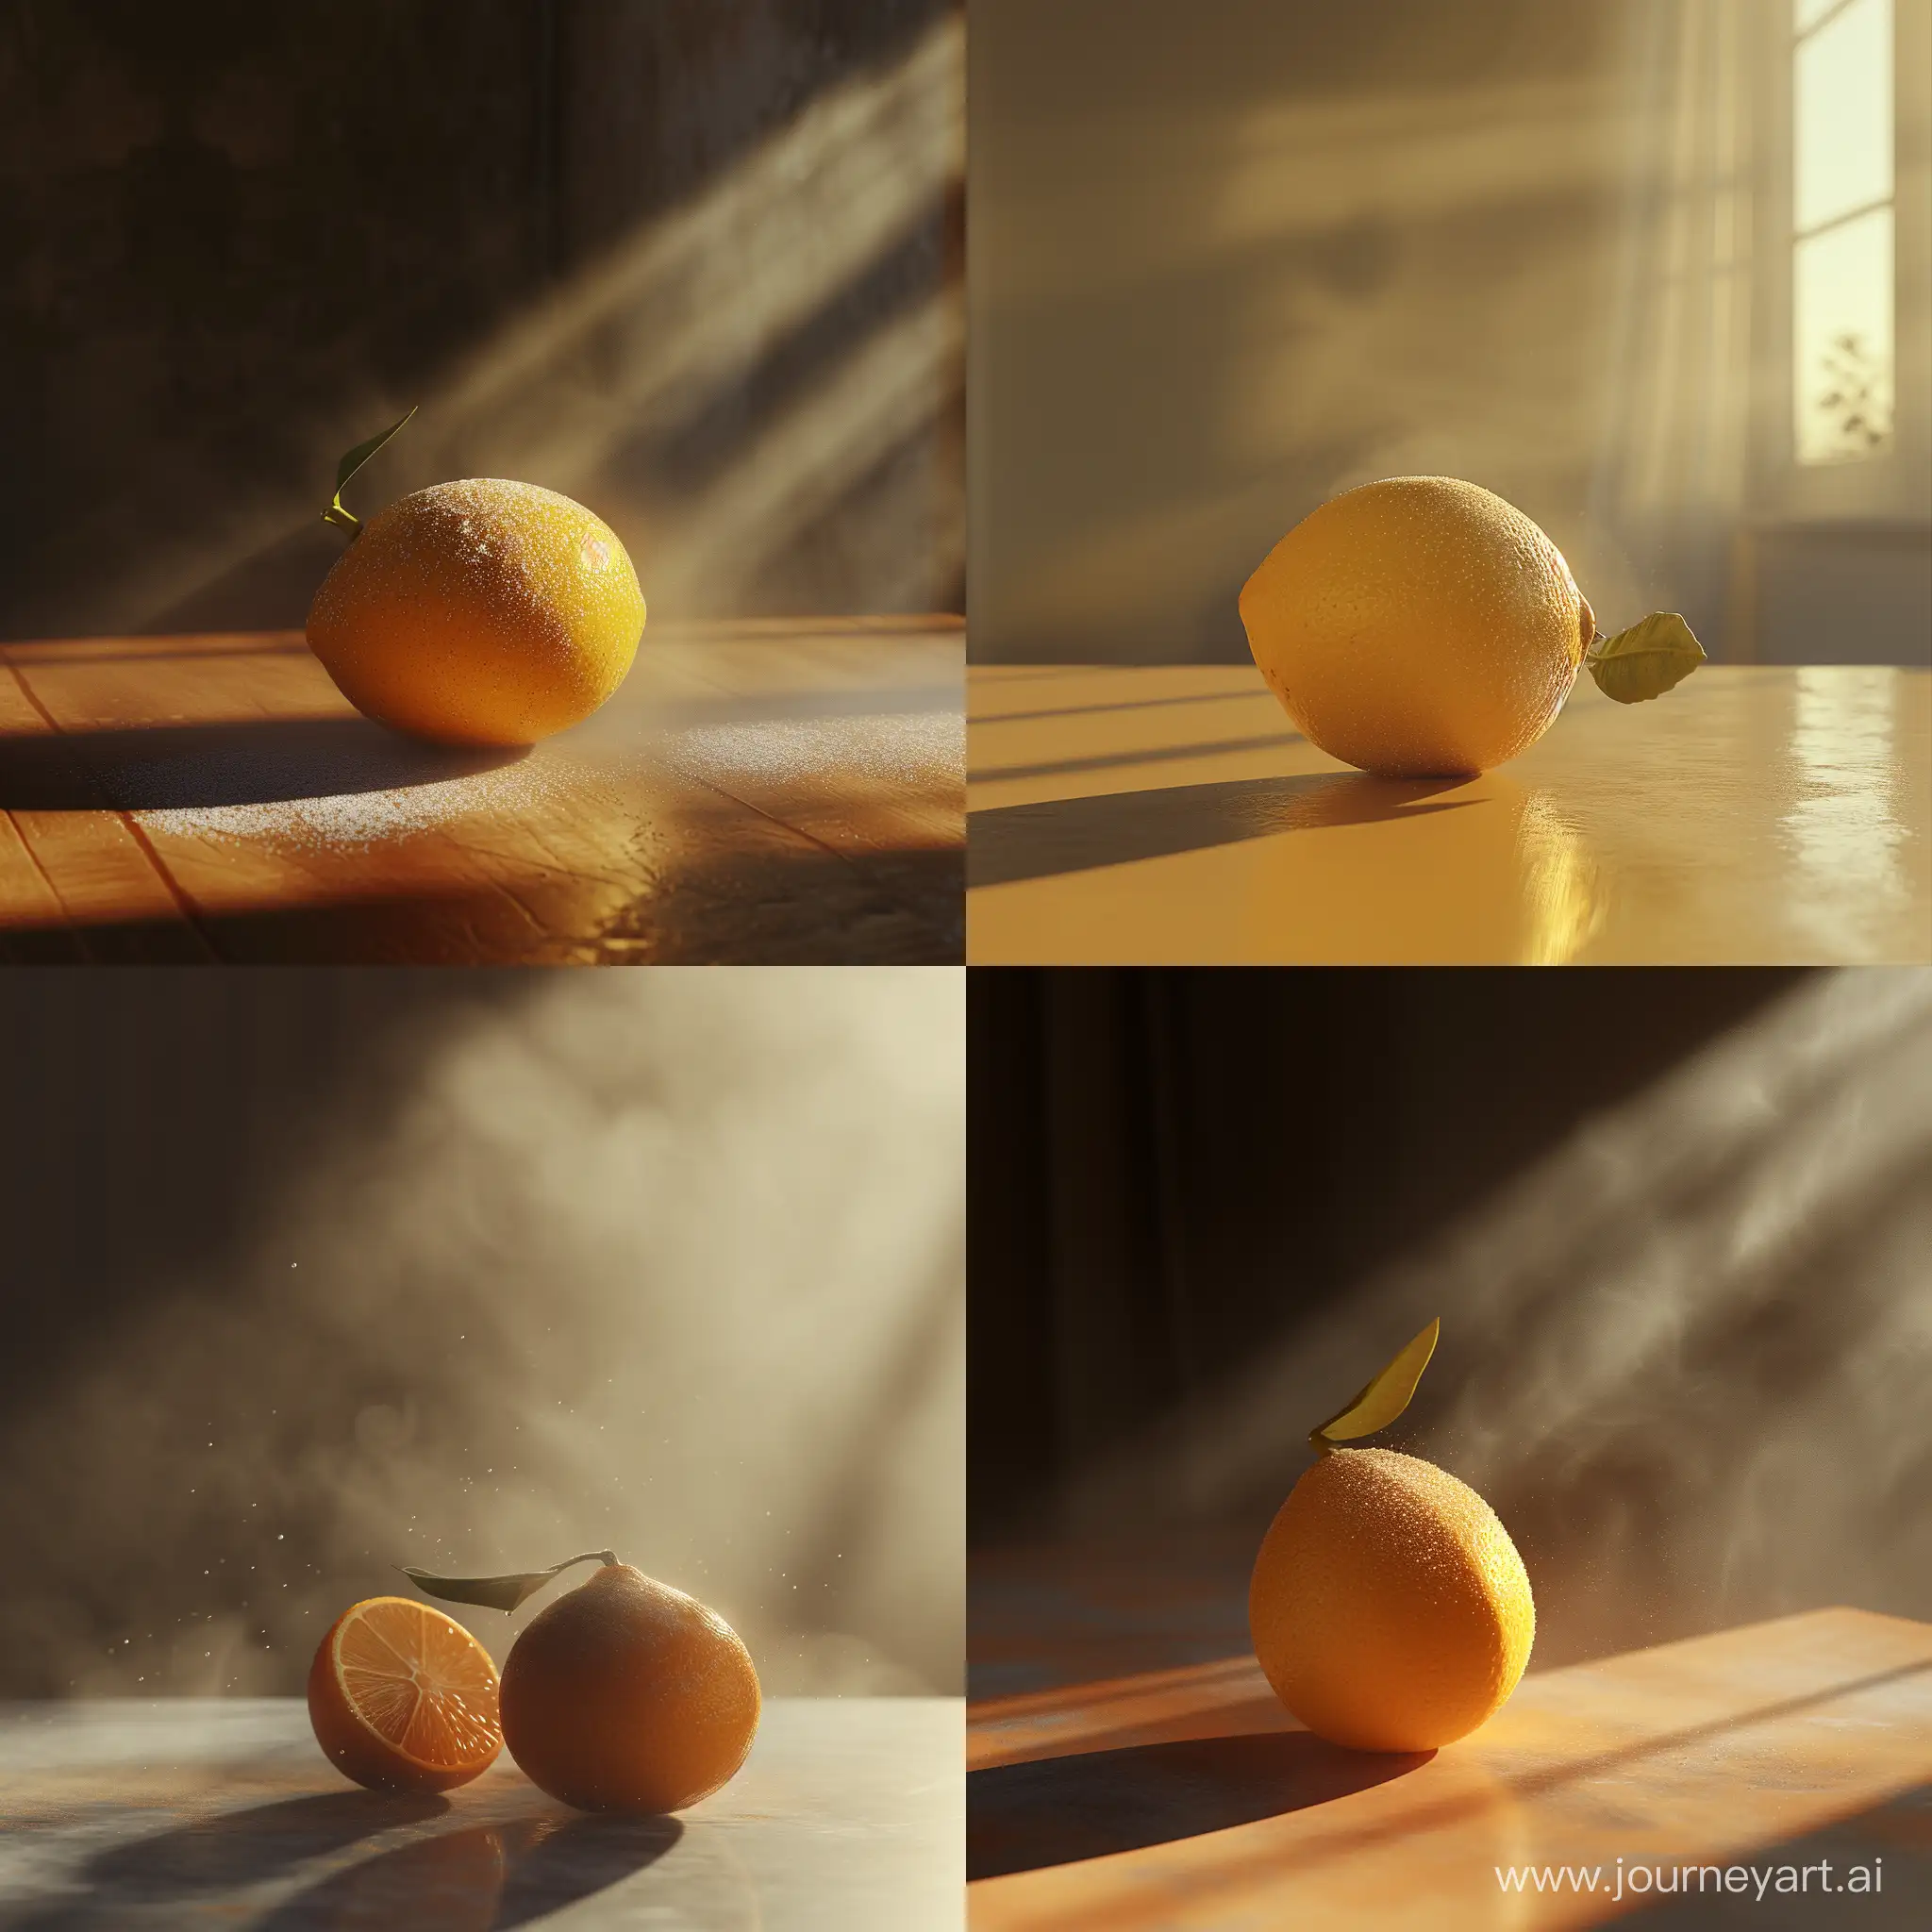 Vibrant-Citrus-Product-Display-with-Hazy-Light